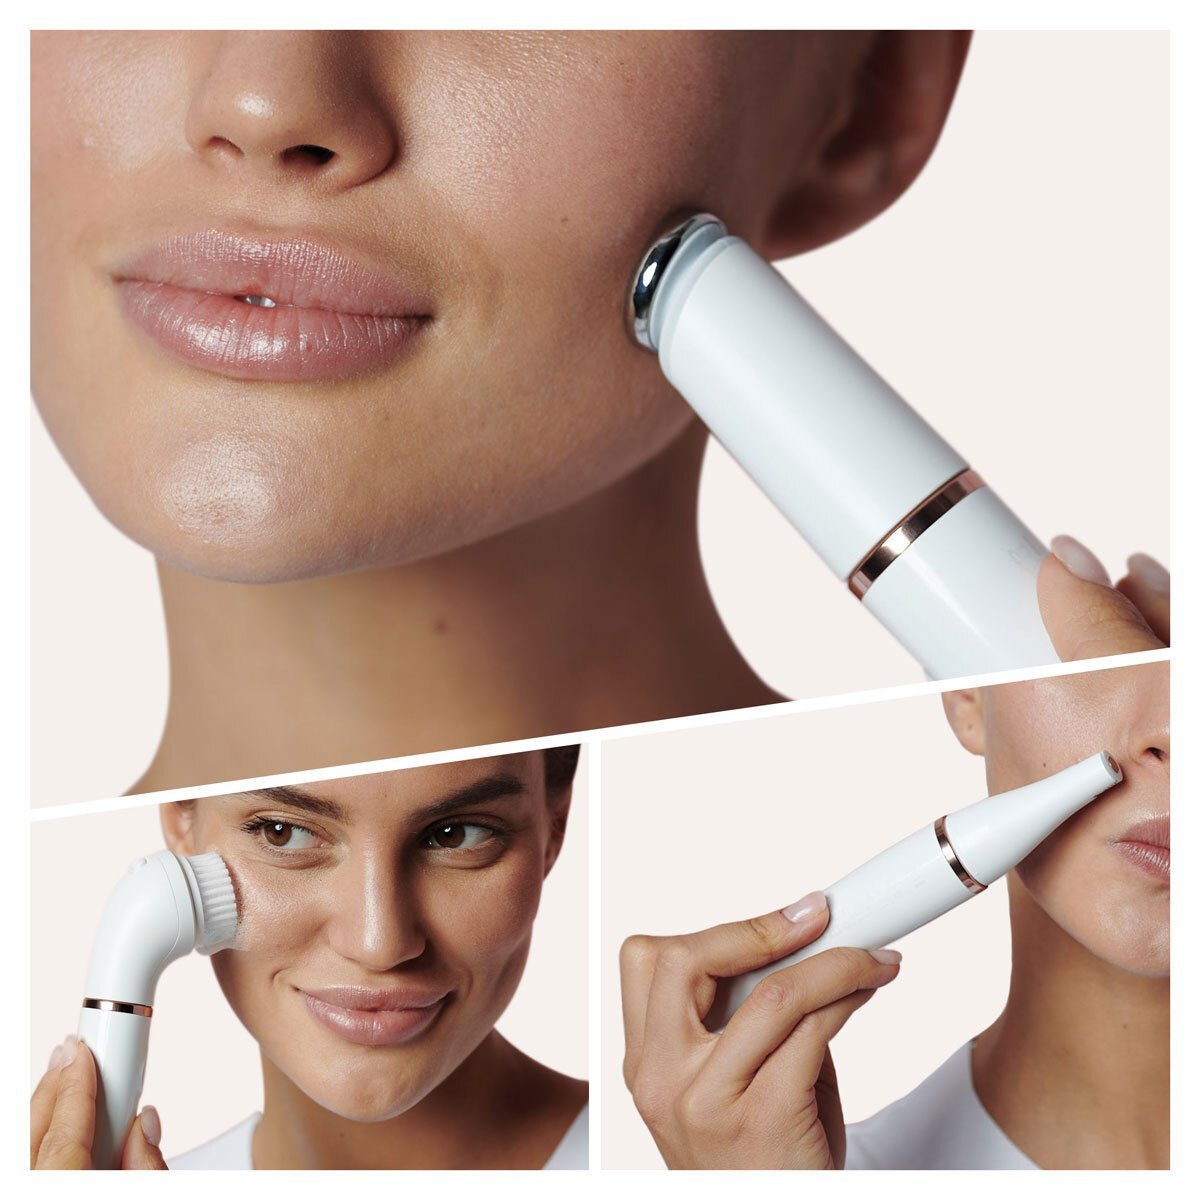 Braun FaceSpa Pro 911 3-in-1 Facial Epilating, Cleansing & Skin Toning System - Signature Retail Stores